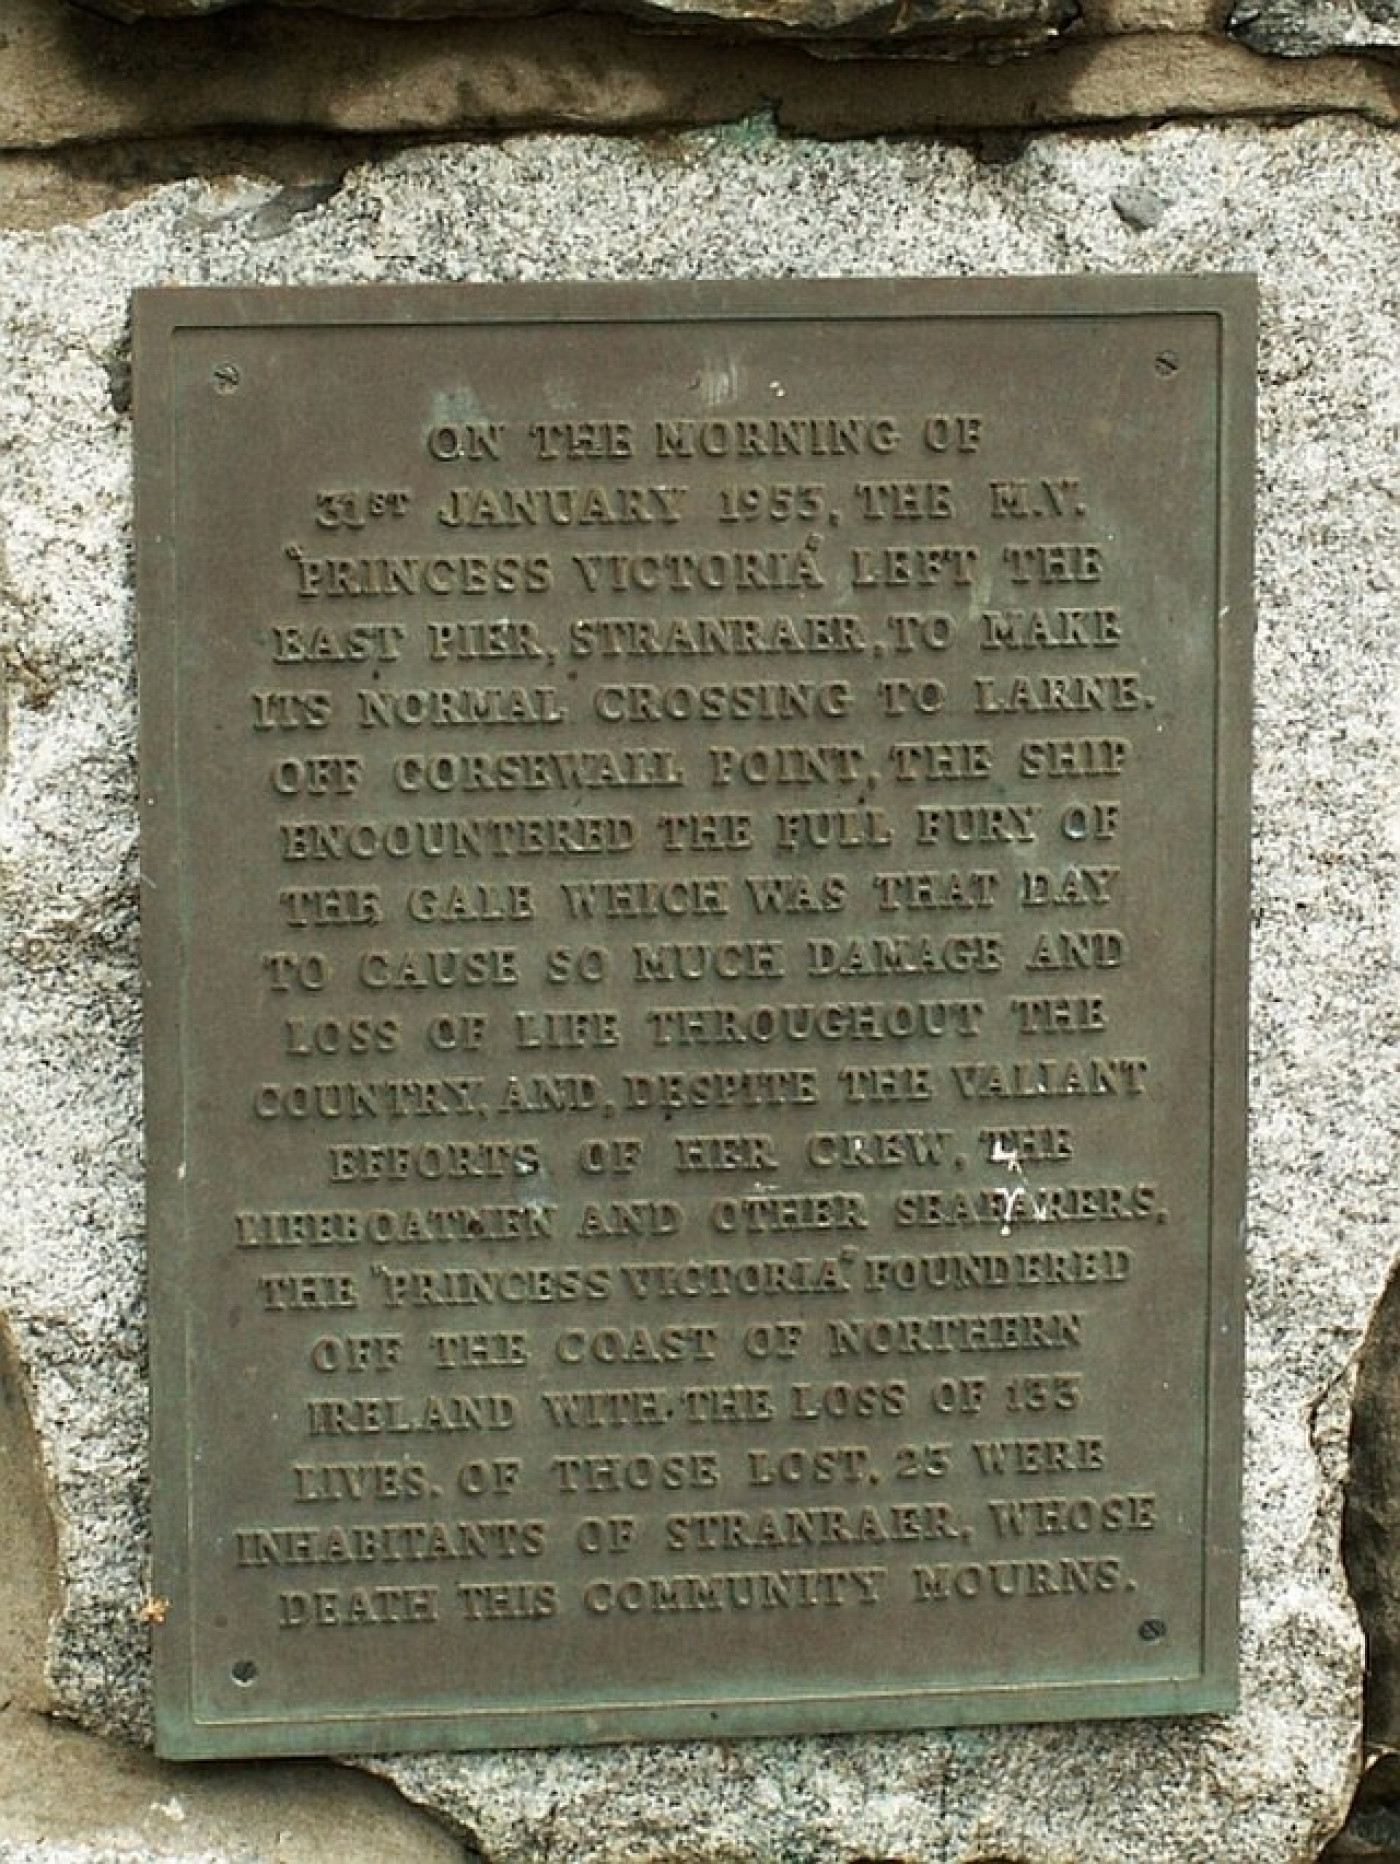 A plaque on MV Princess Victoria memorial in Agnew Park